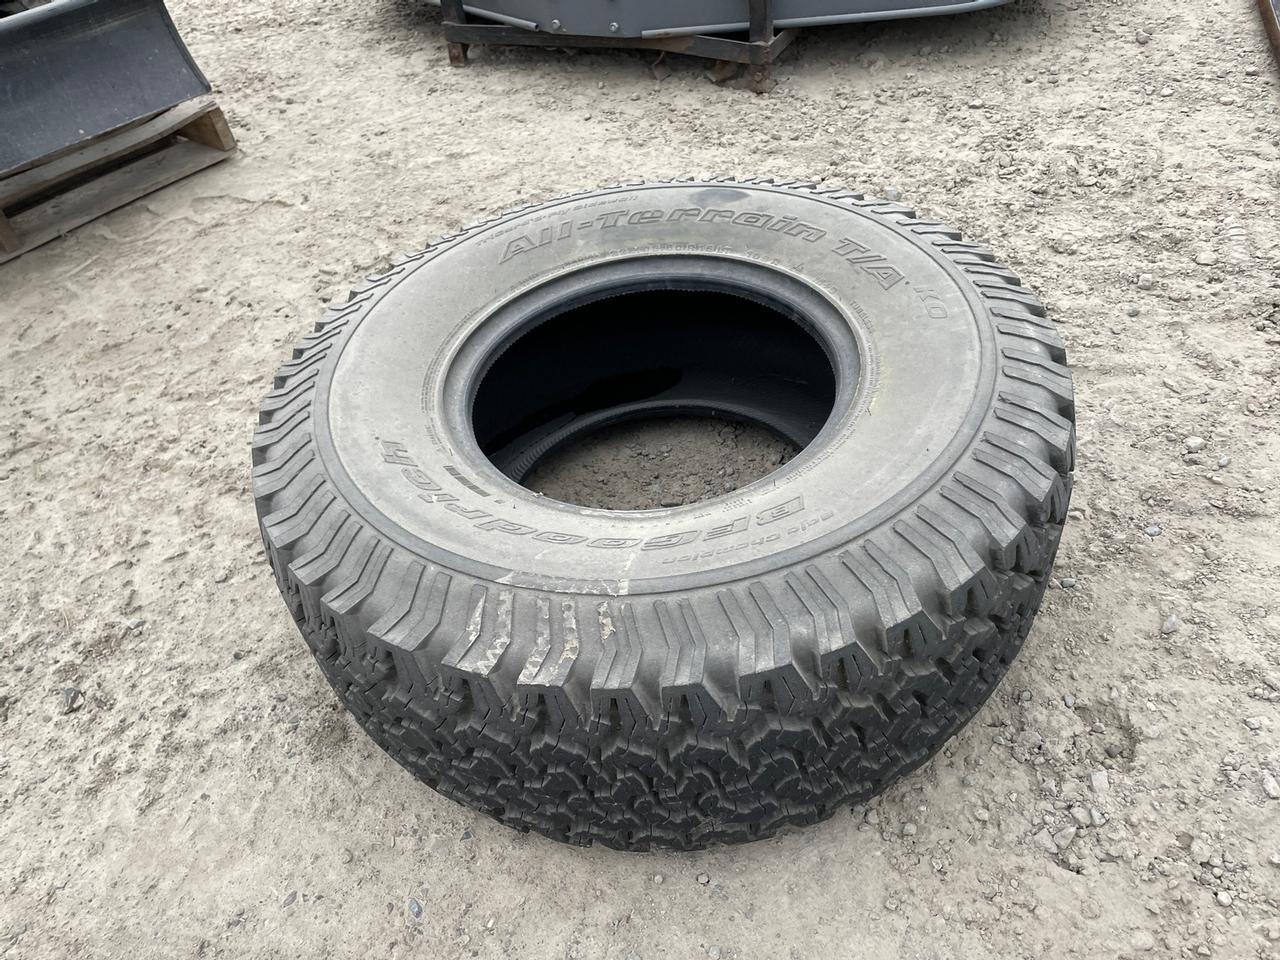 1 BFG Goodrich tire 33x12.50R15